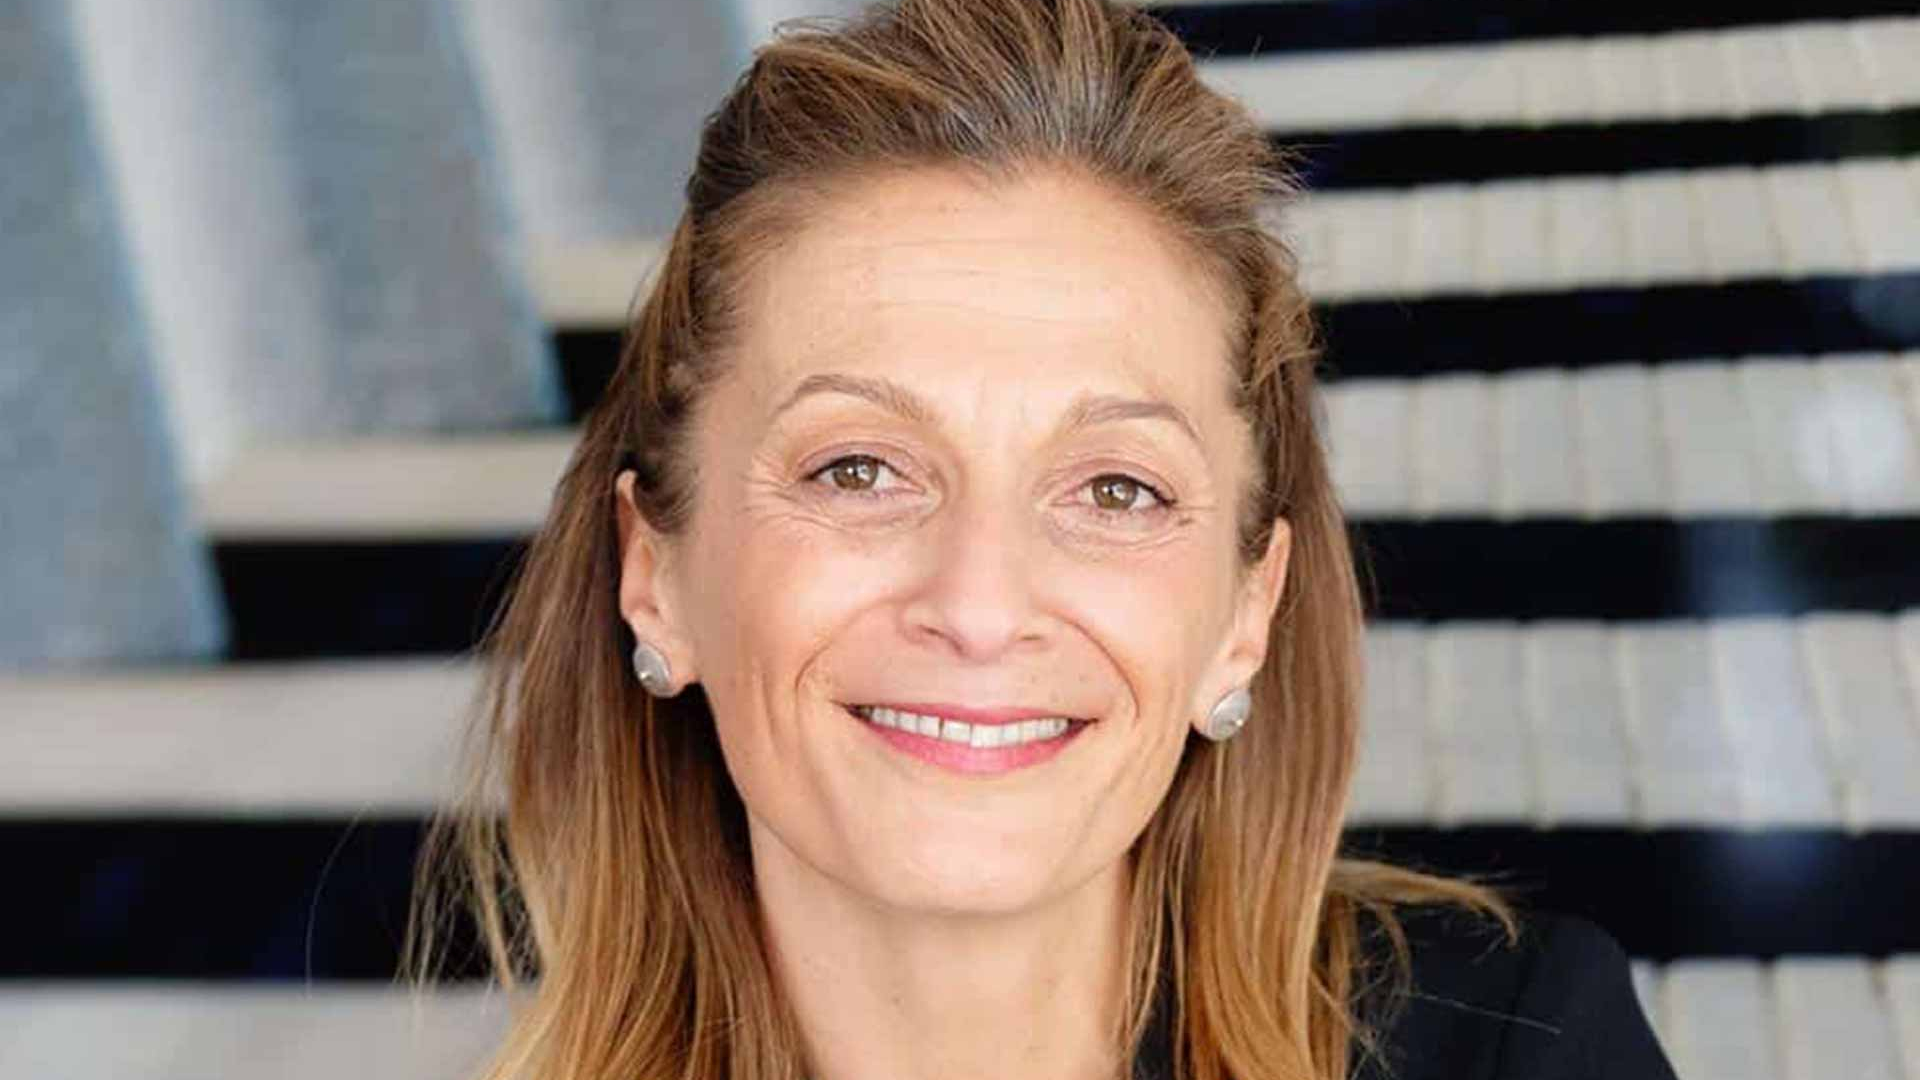 Mexedia nomina Laura Melania Rocchi in qualità di Chief Marketing Officer